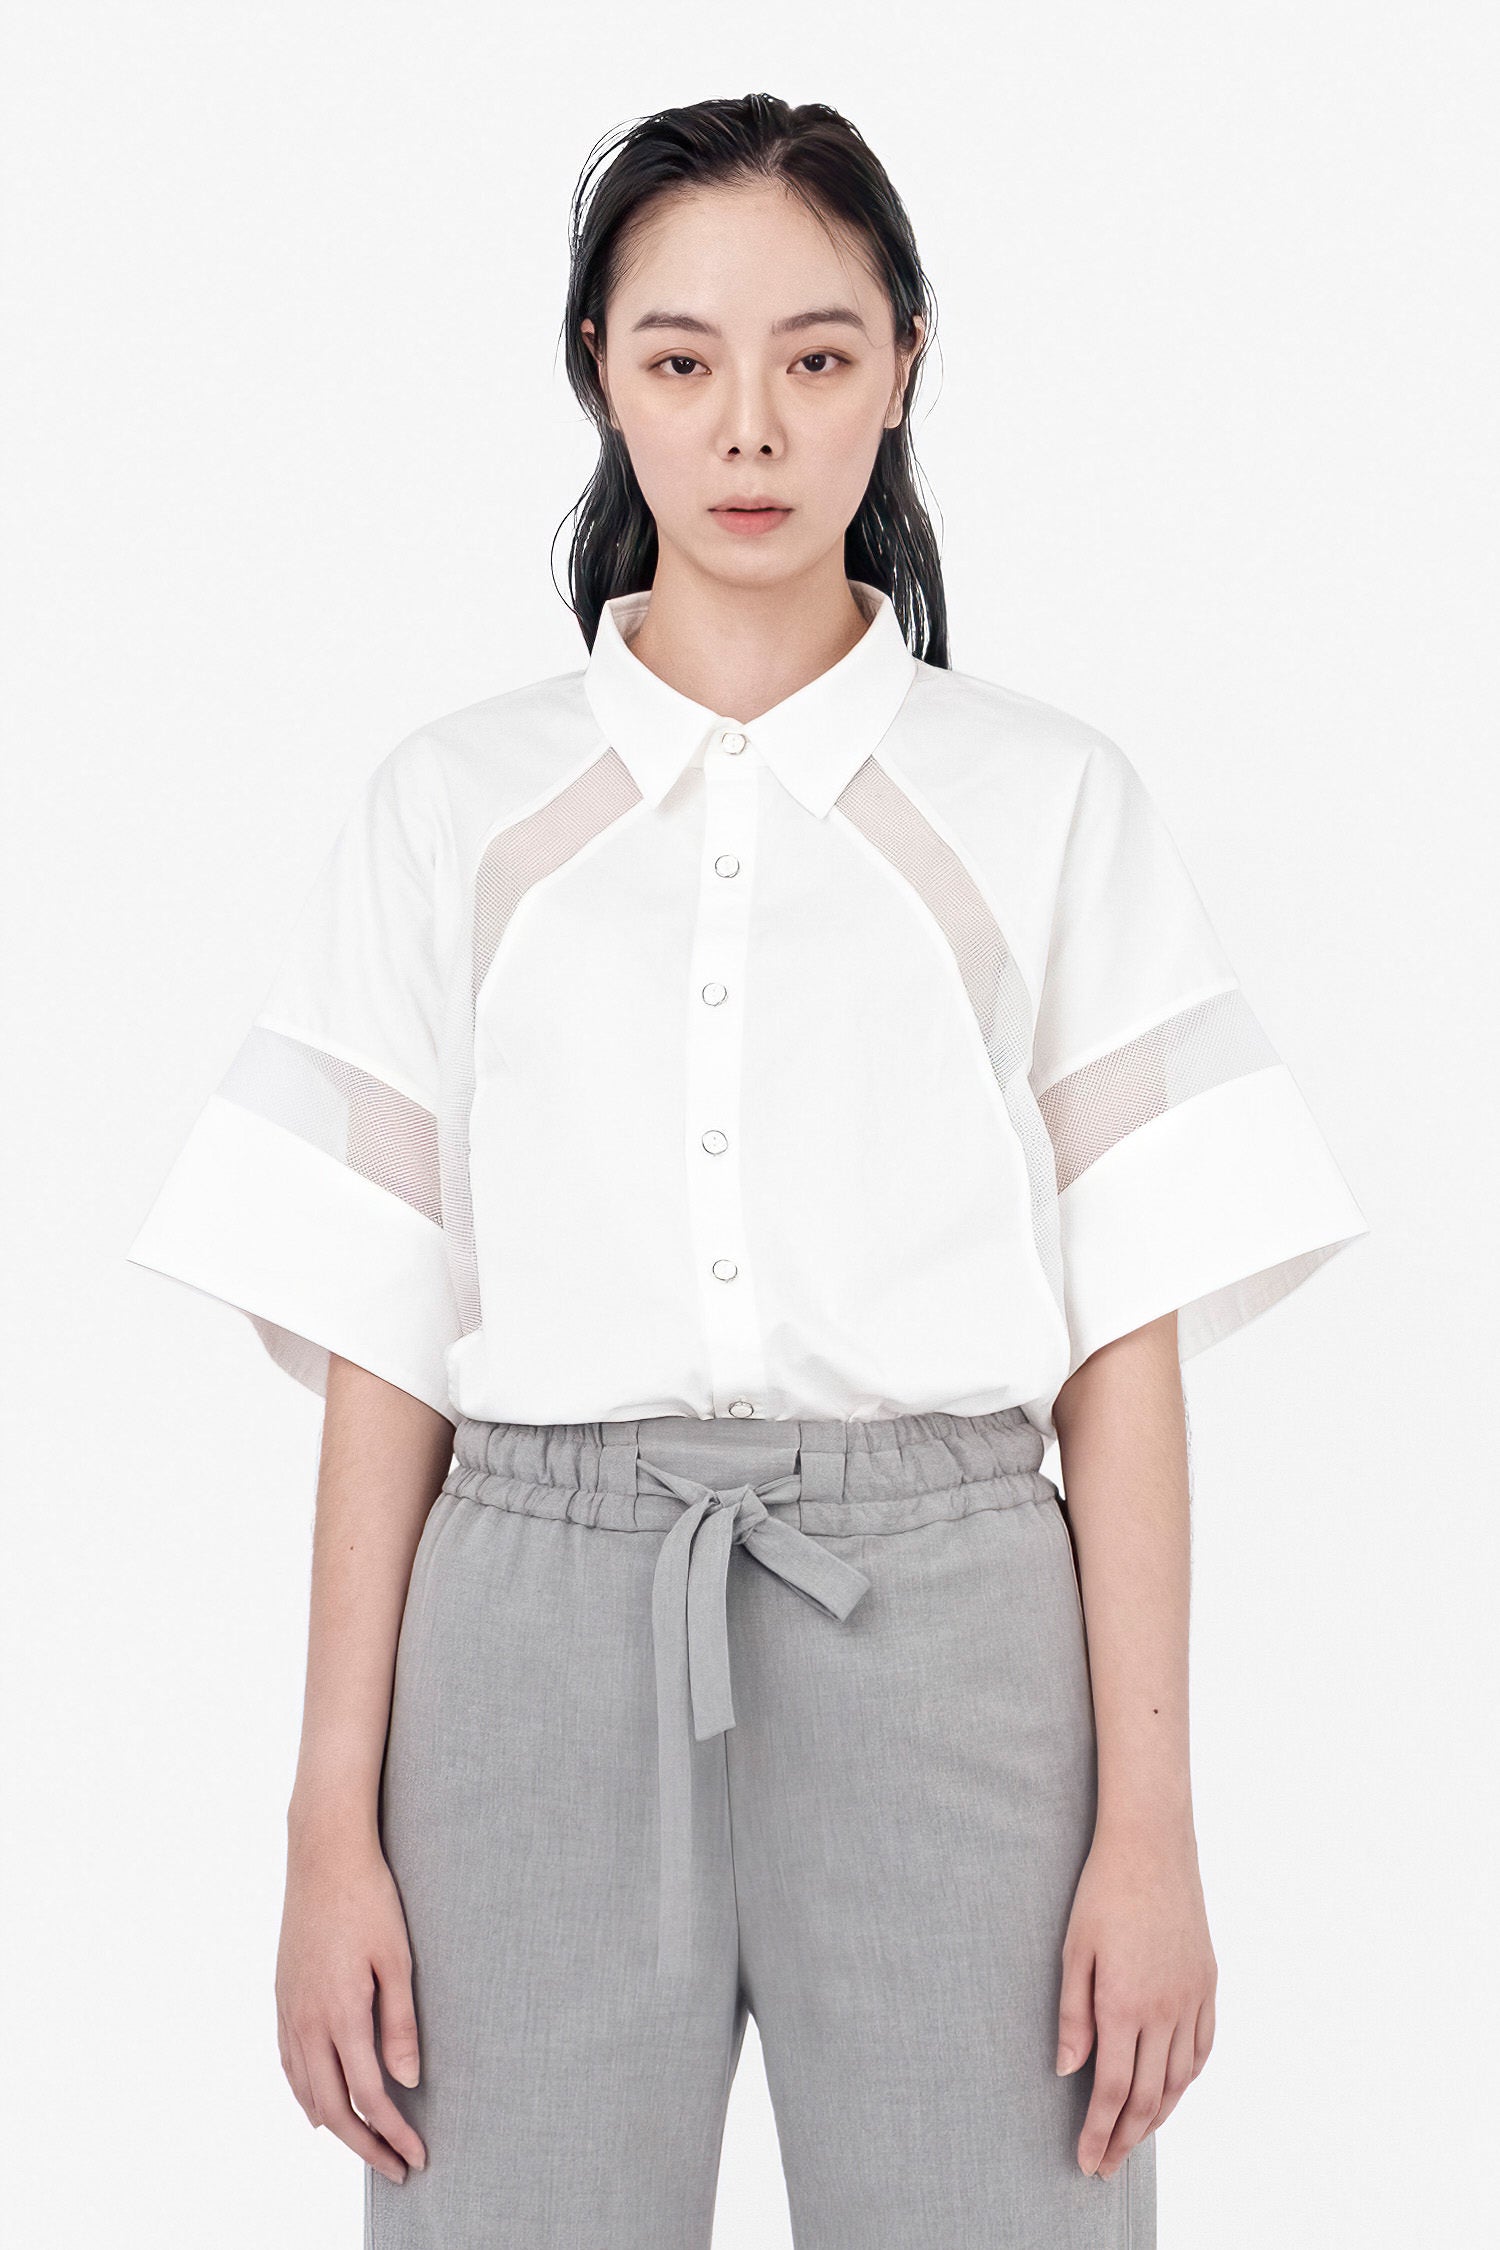 SEANNUNG - WOMEN - styled Short Sleeve Mesh Shirt W-網布拼接短袖襯衫 